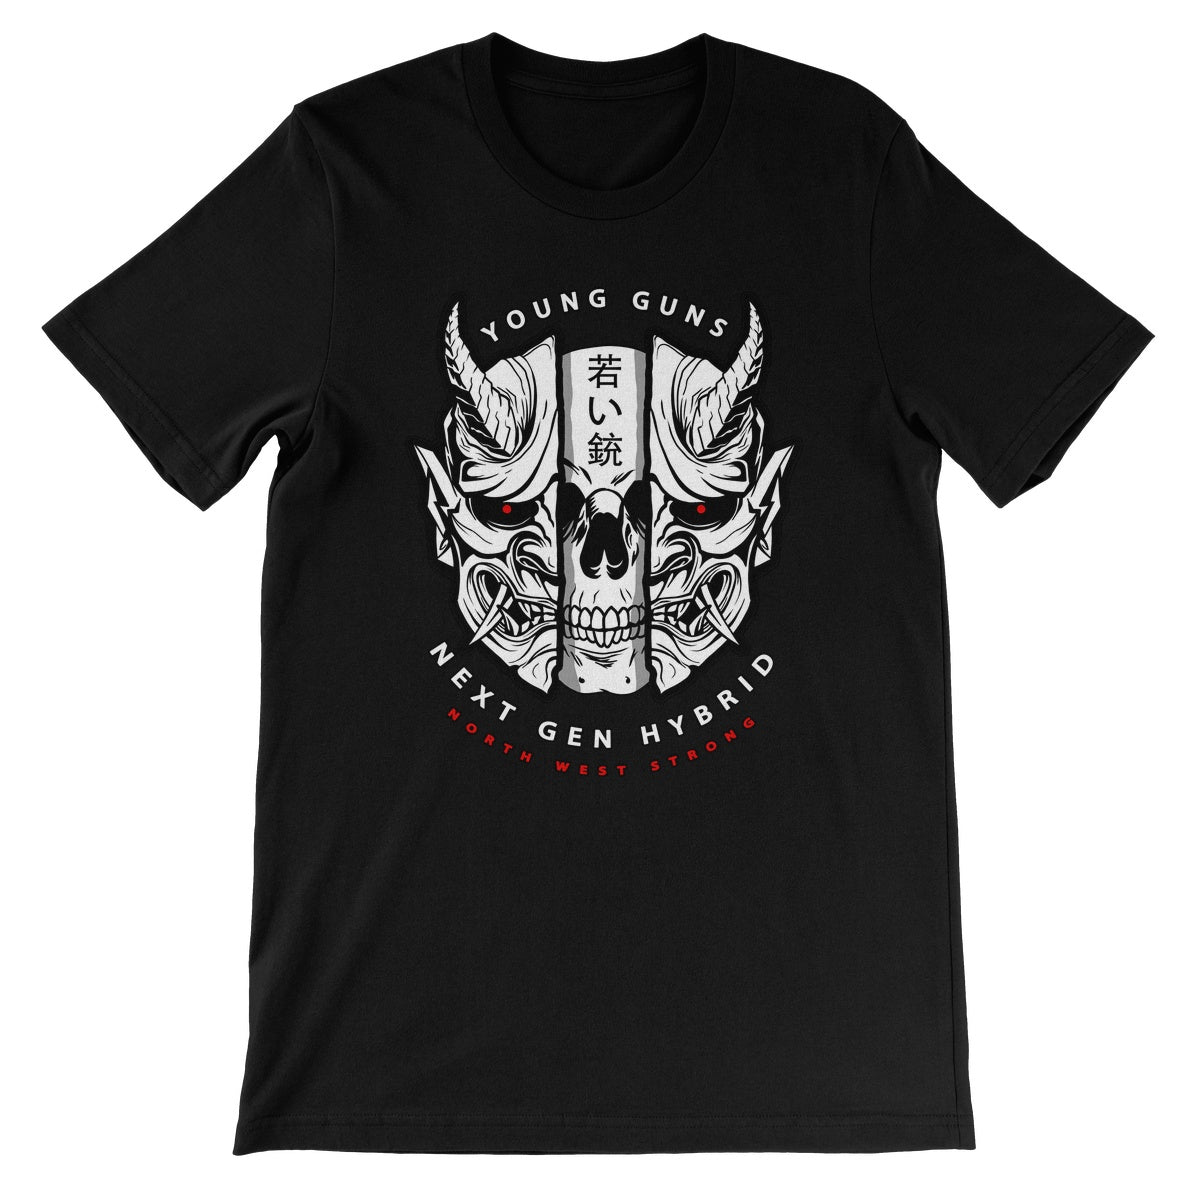 TNT Extreme Wrestling Young Guns Unisex Short Sleeve T-Shirt